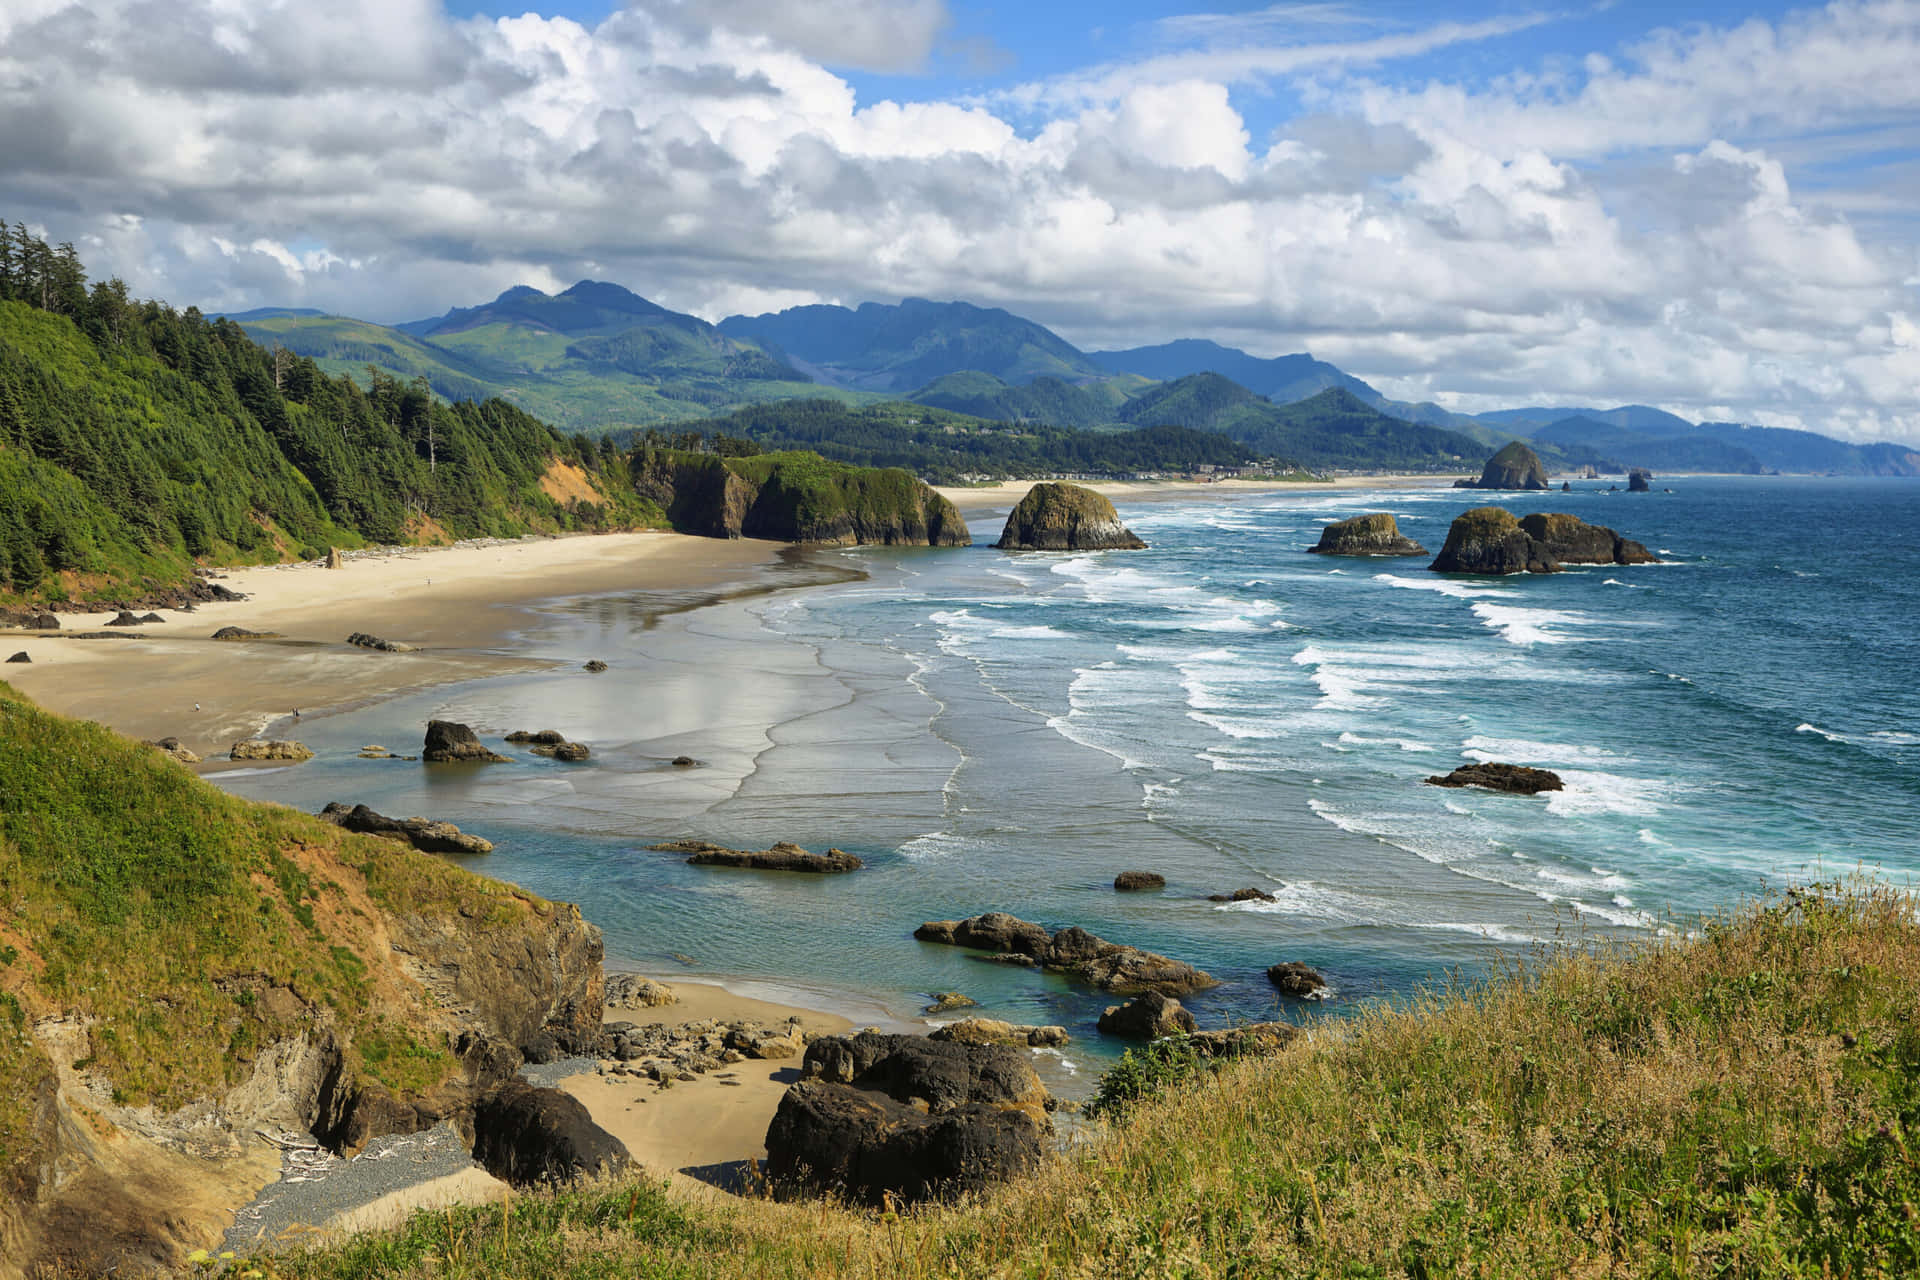 Explore the majestic Oregon Coast